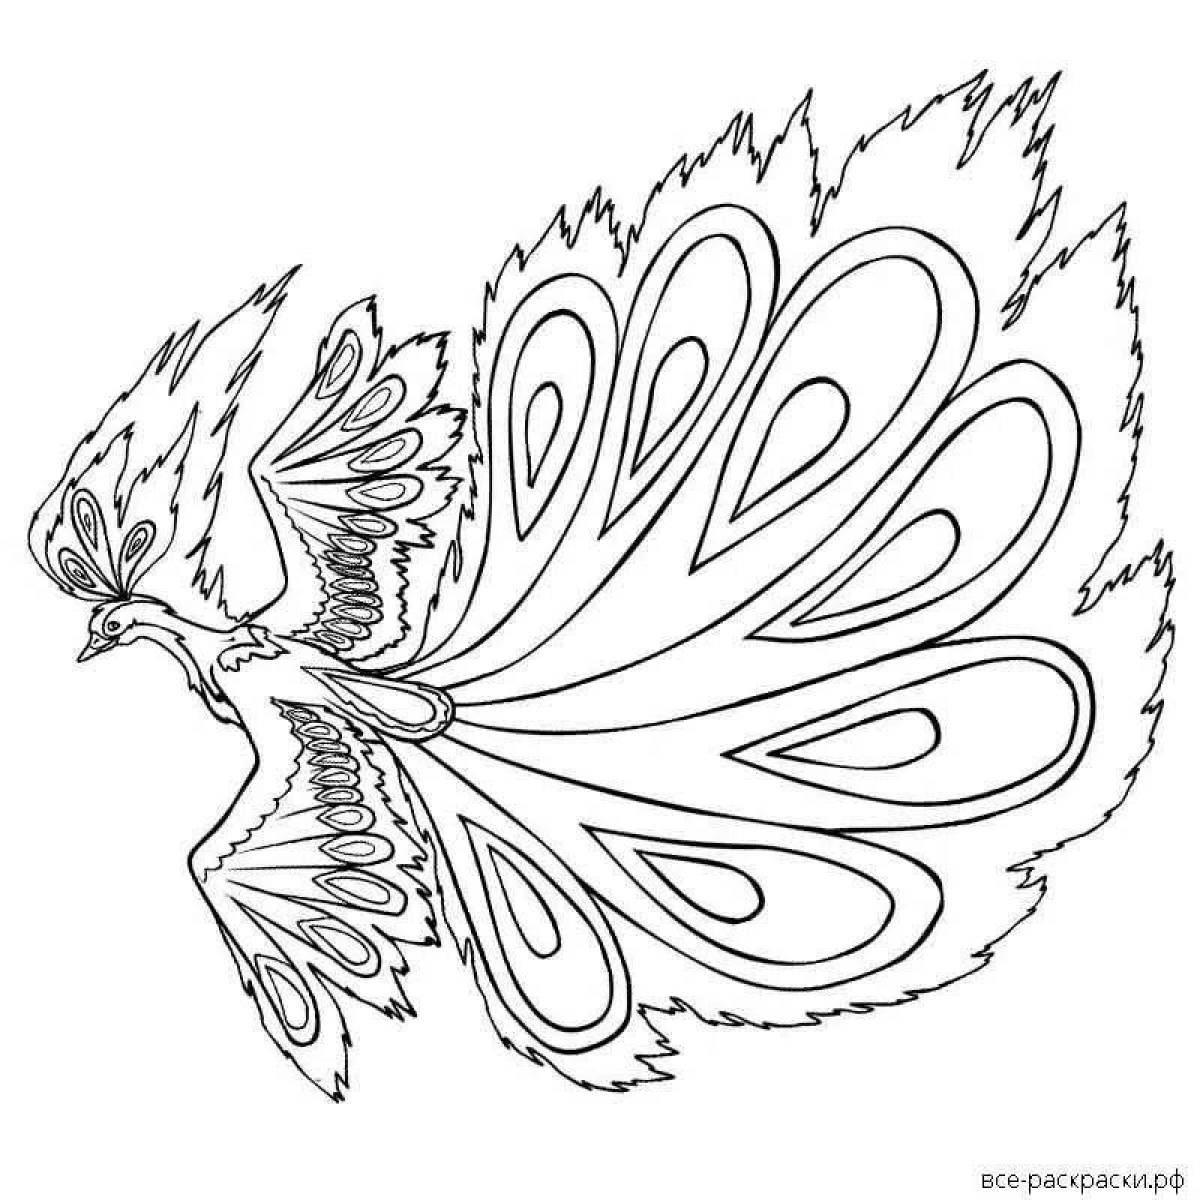 Fantastic firebird feather coloring book